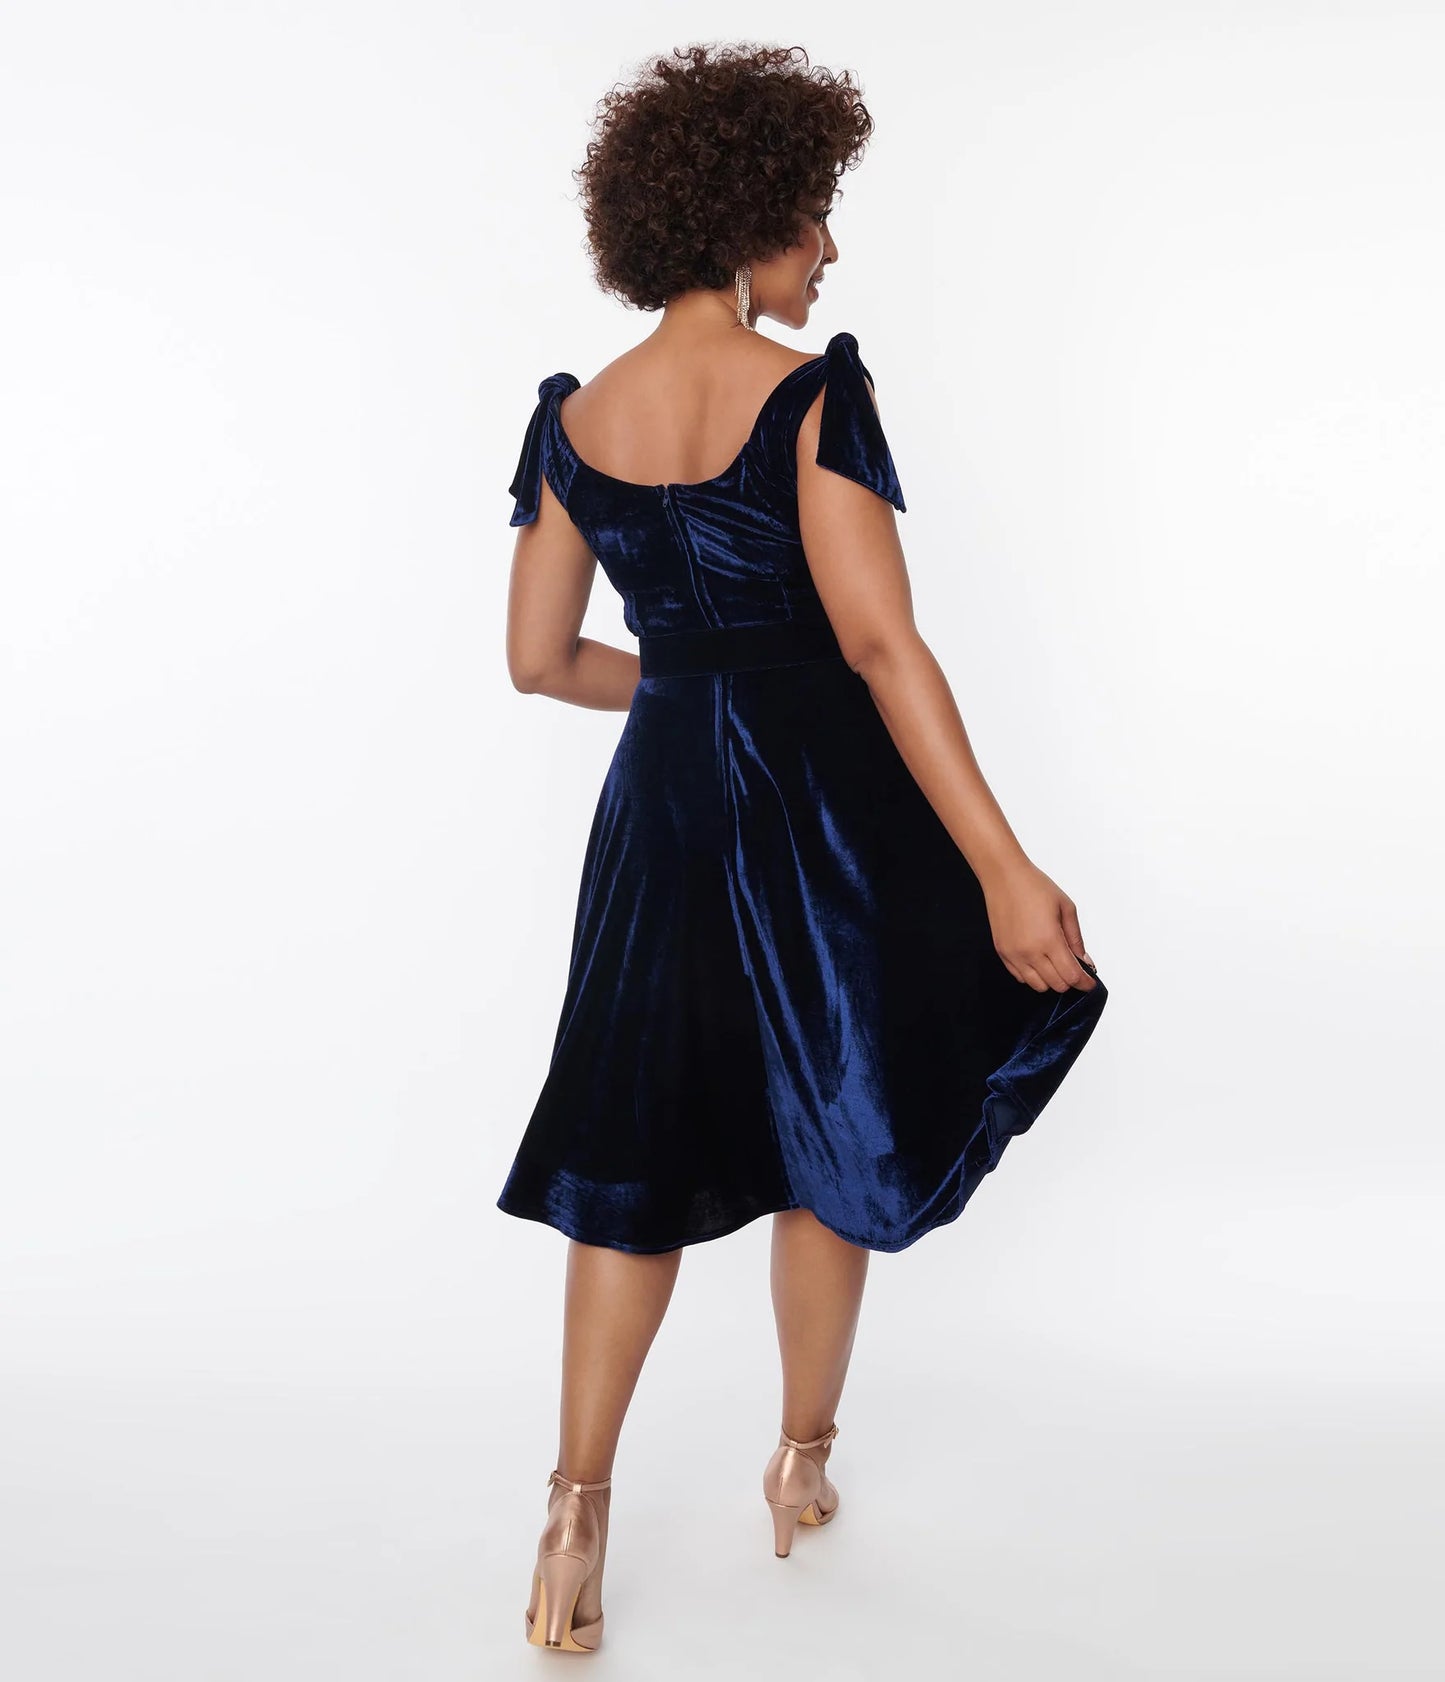 Velvet Swing dress with pockets 1940s and 1950s inspired